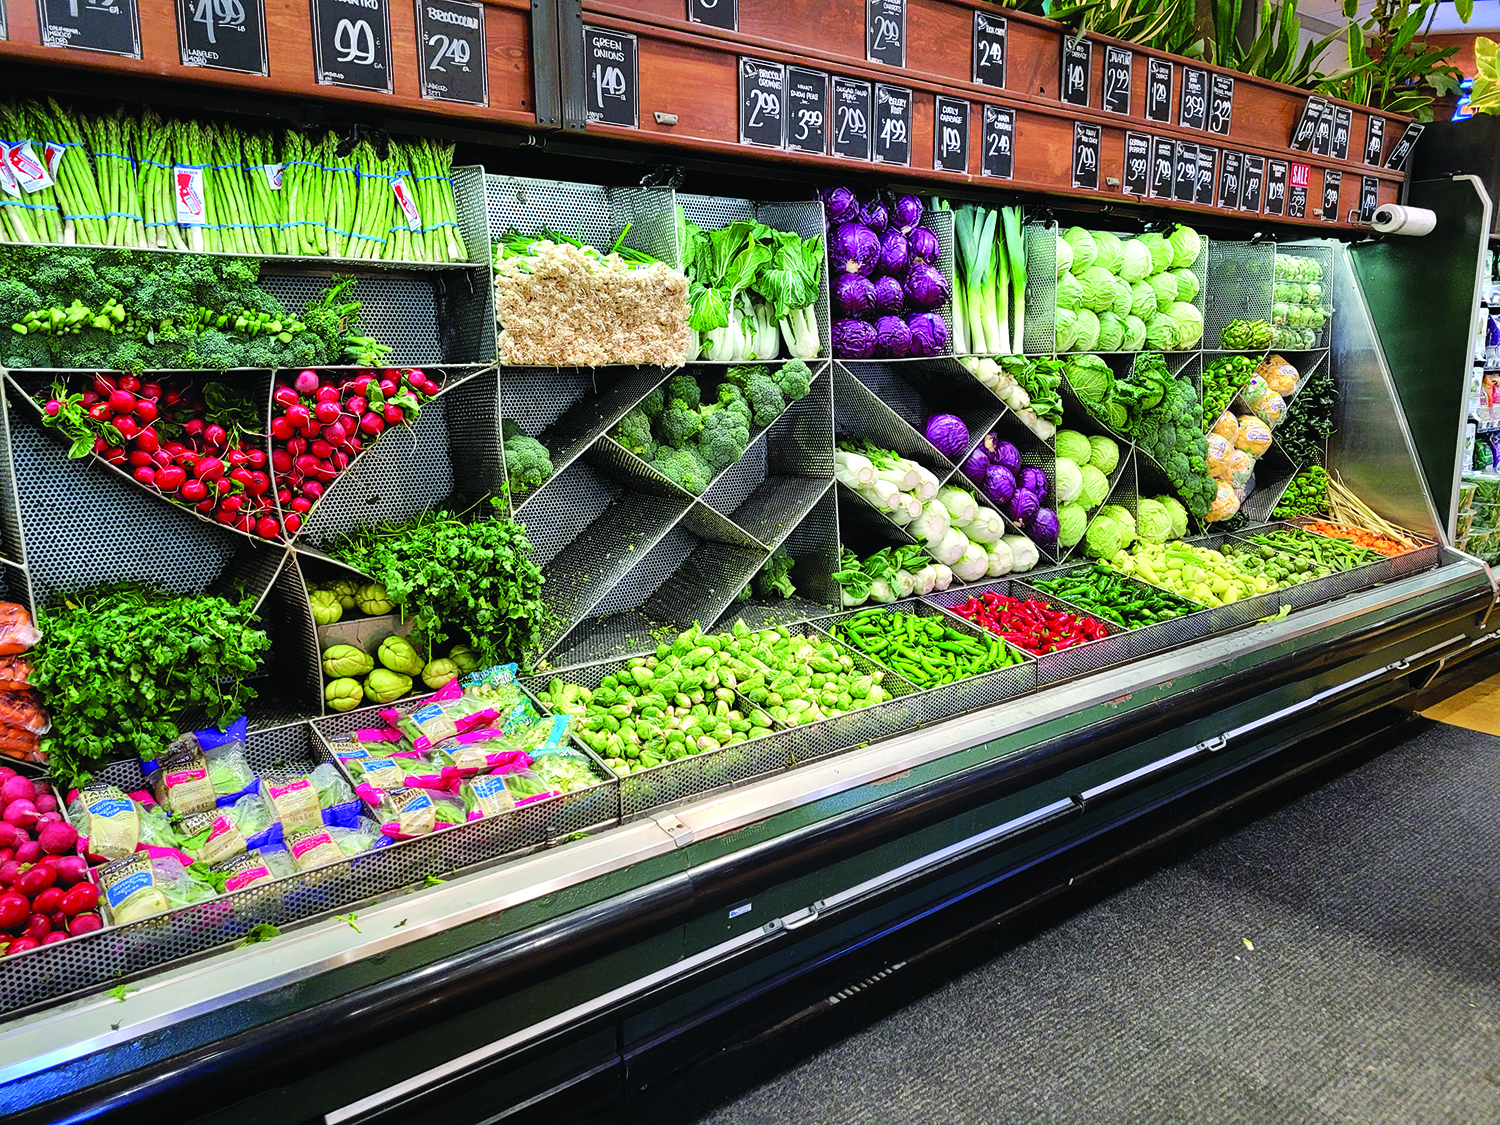 Abundant vegetables in diagonal displays in a store